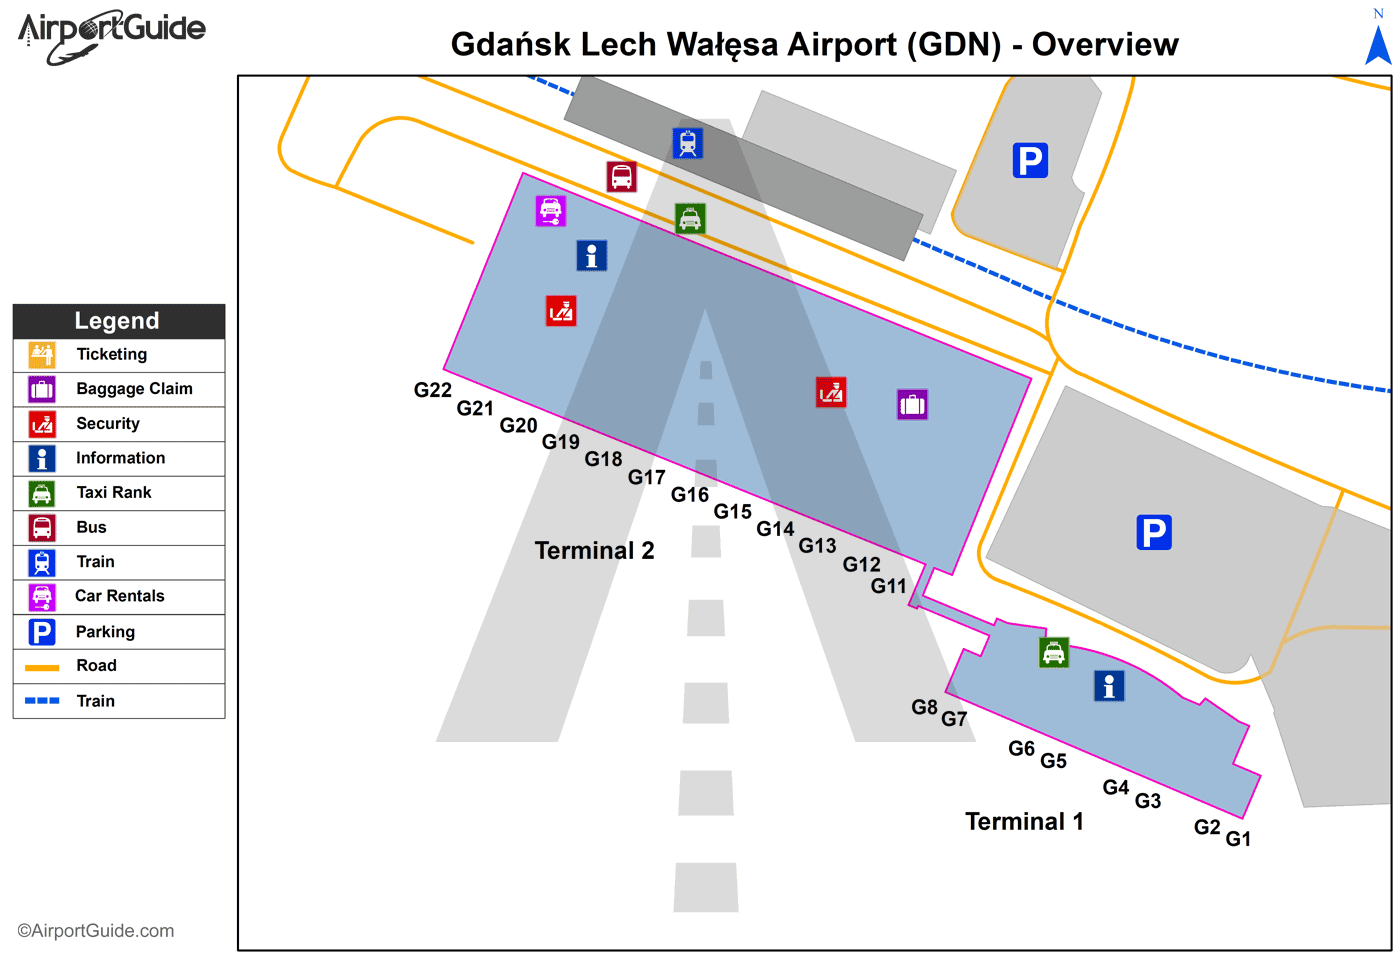 Gdańsk - Gdańsk Lech Wałęsa (GDN) Airport Terminal Map - Overview